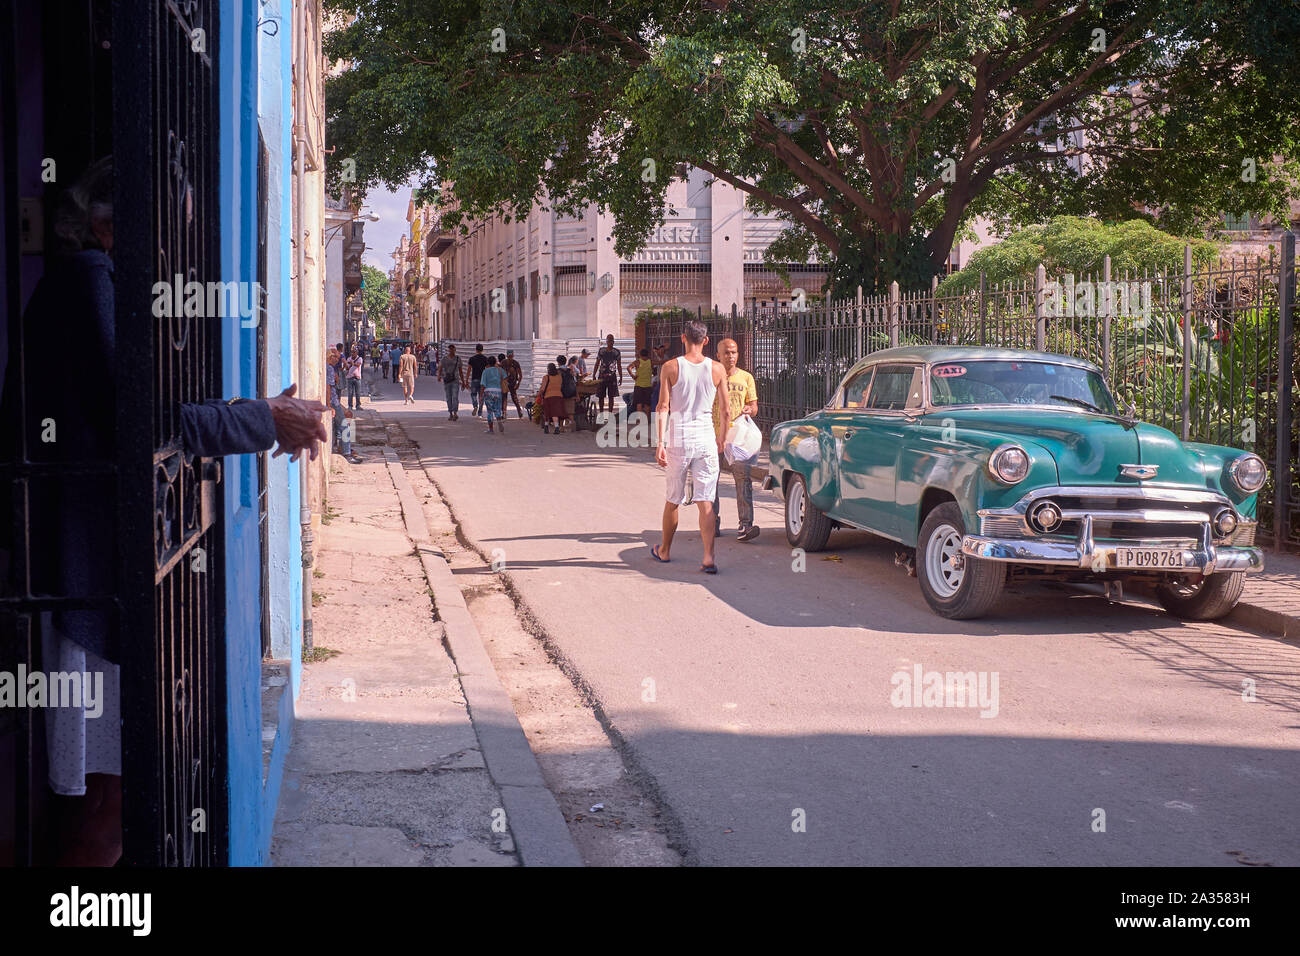 Regardant les passants dans les rues de La Havane, Cuba Banque D'Images